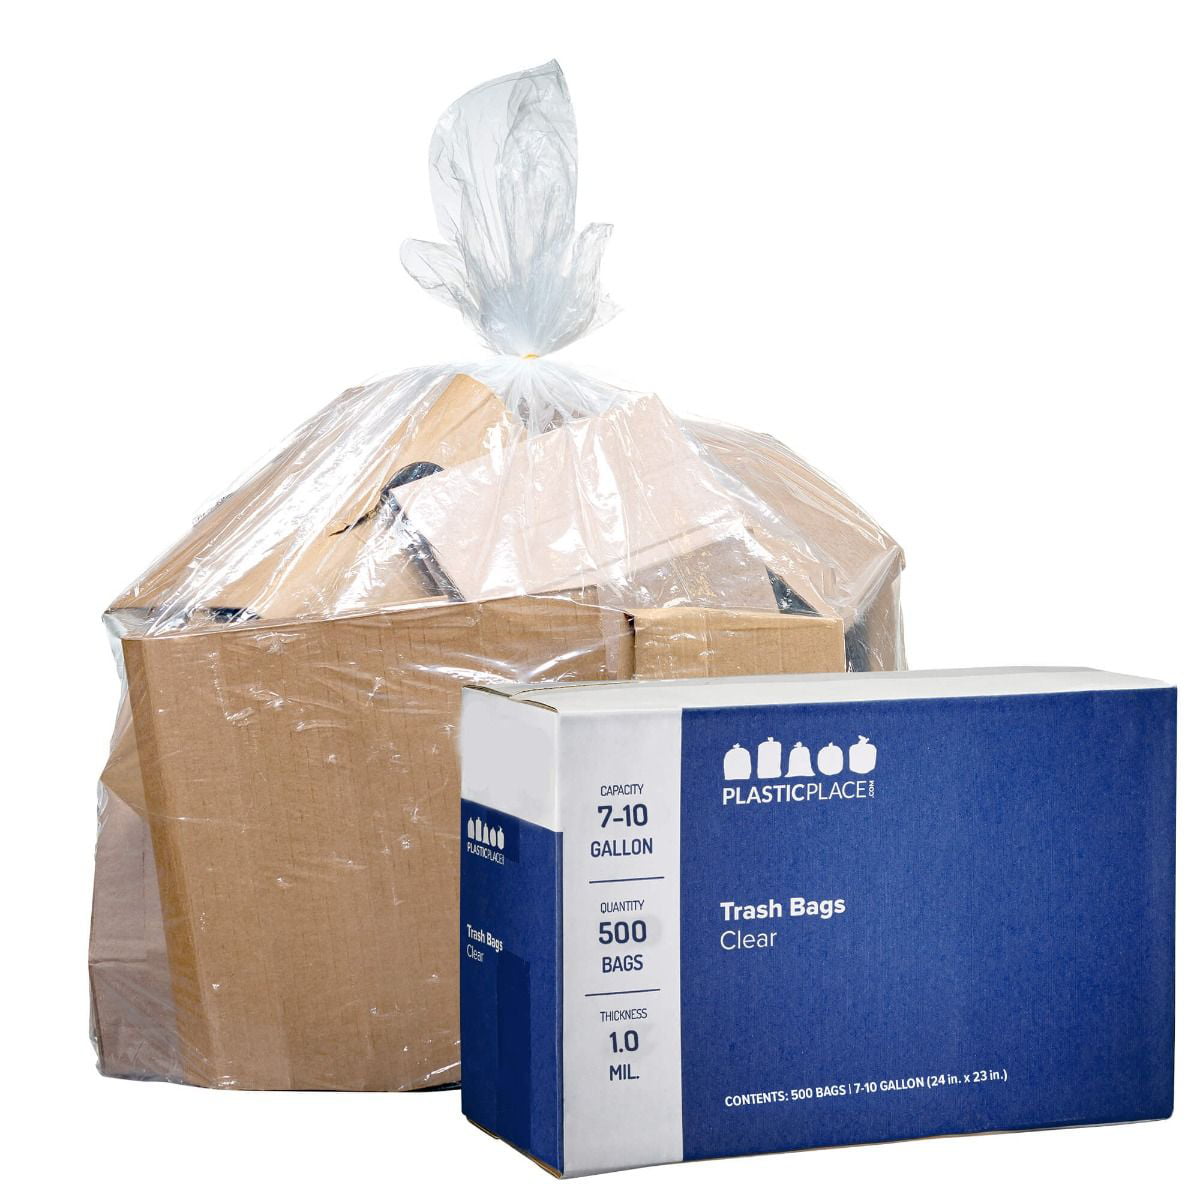 Handi-Bag Super Value Pack .55mil 21 1/2 x 24,White-130/Box-Trash Bags*2 8gal